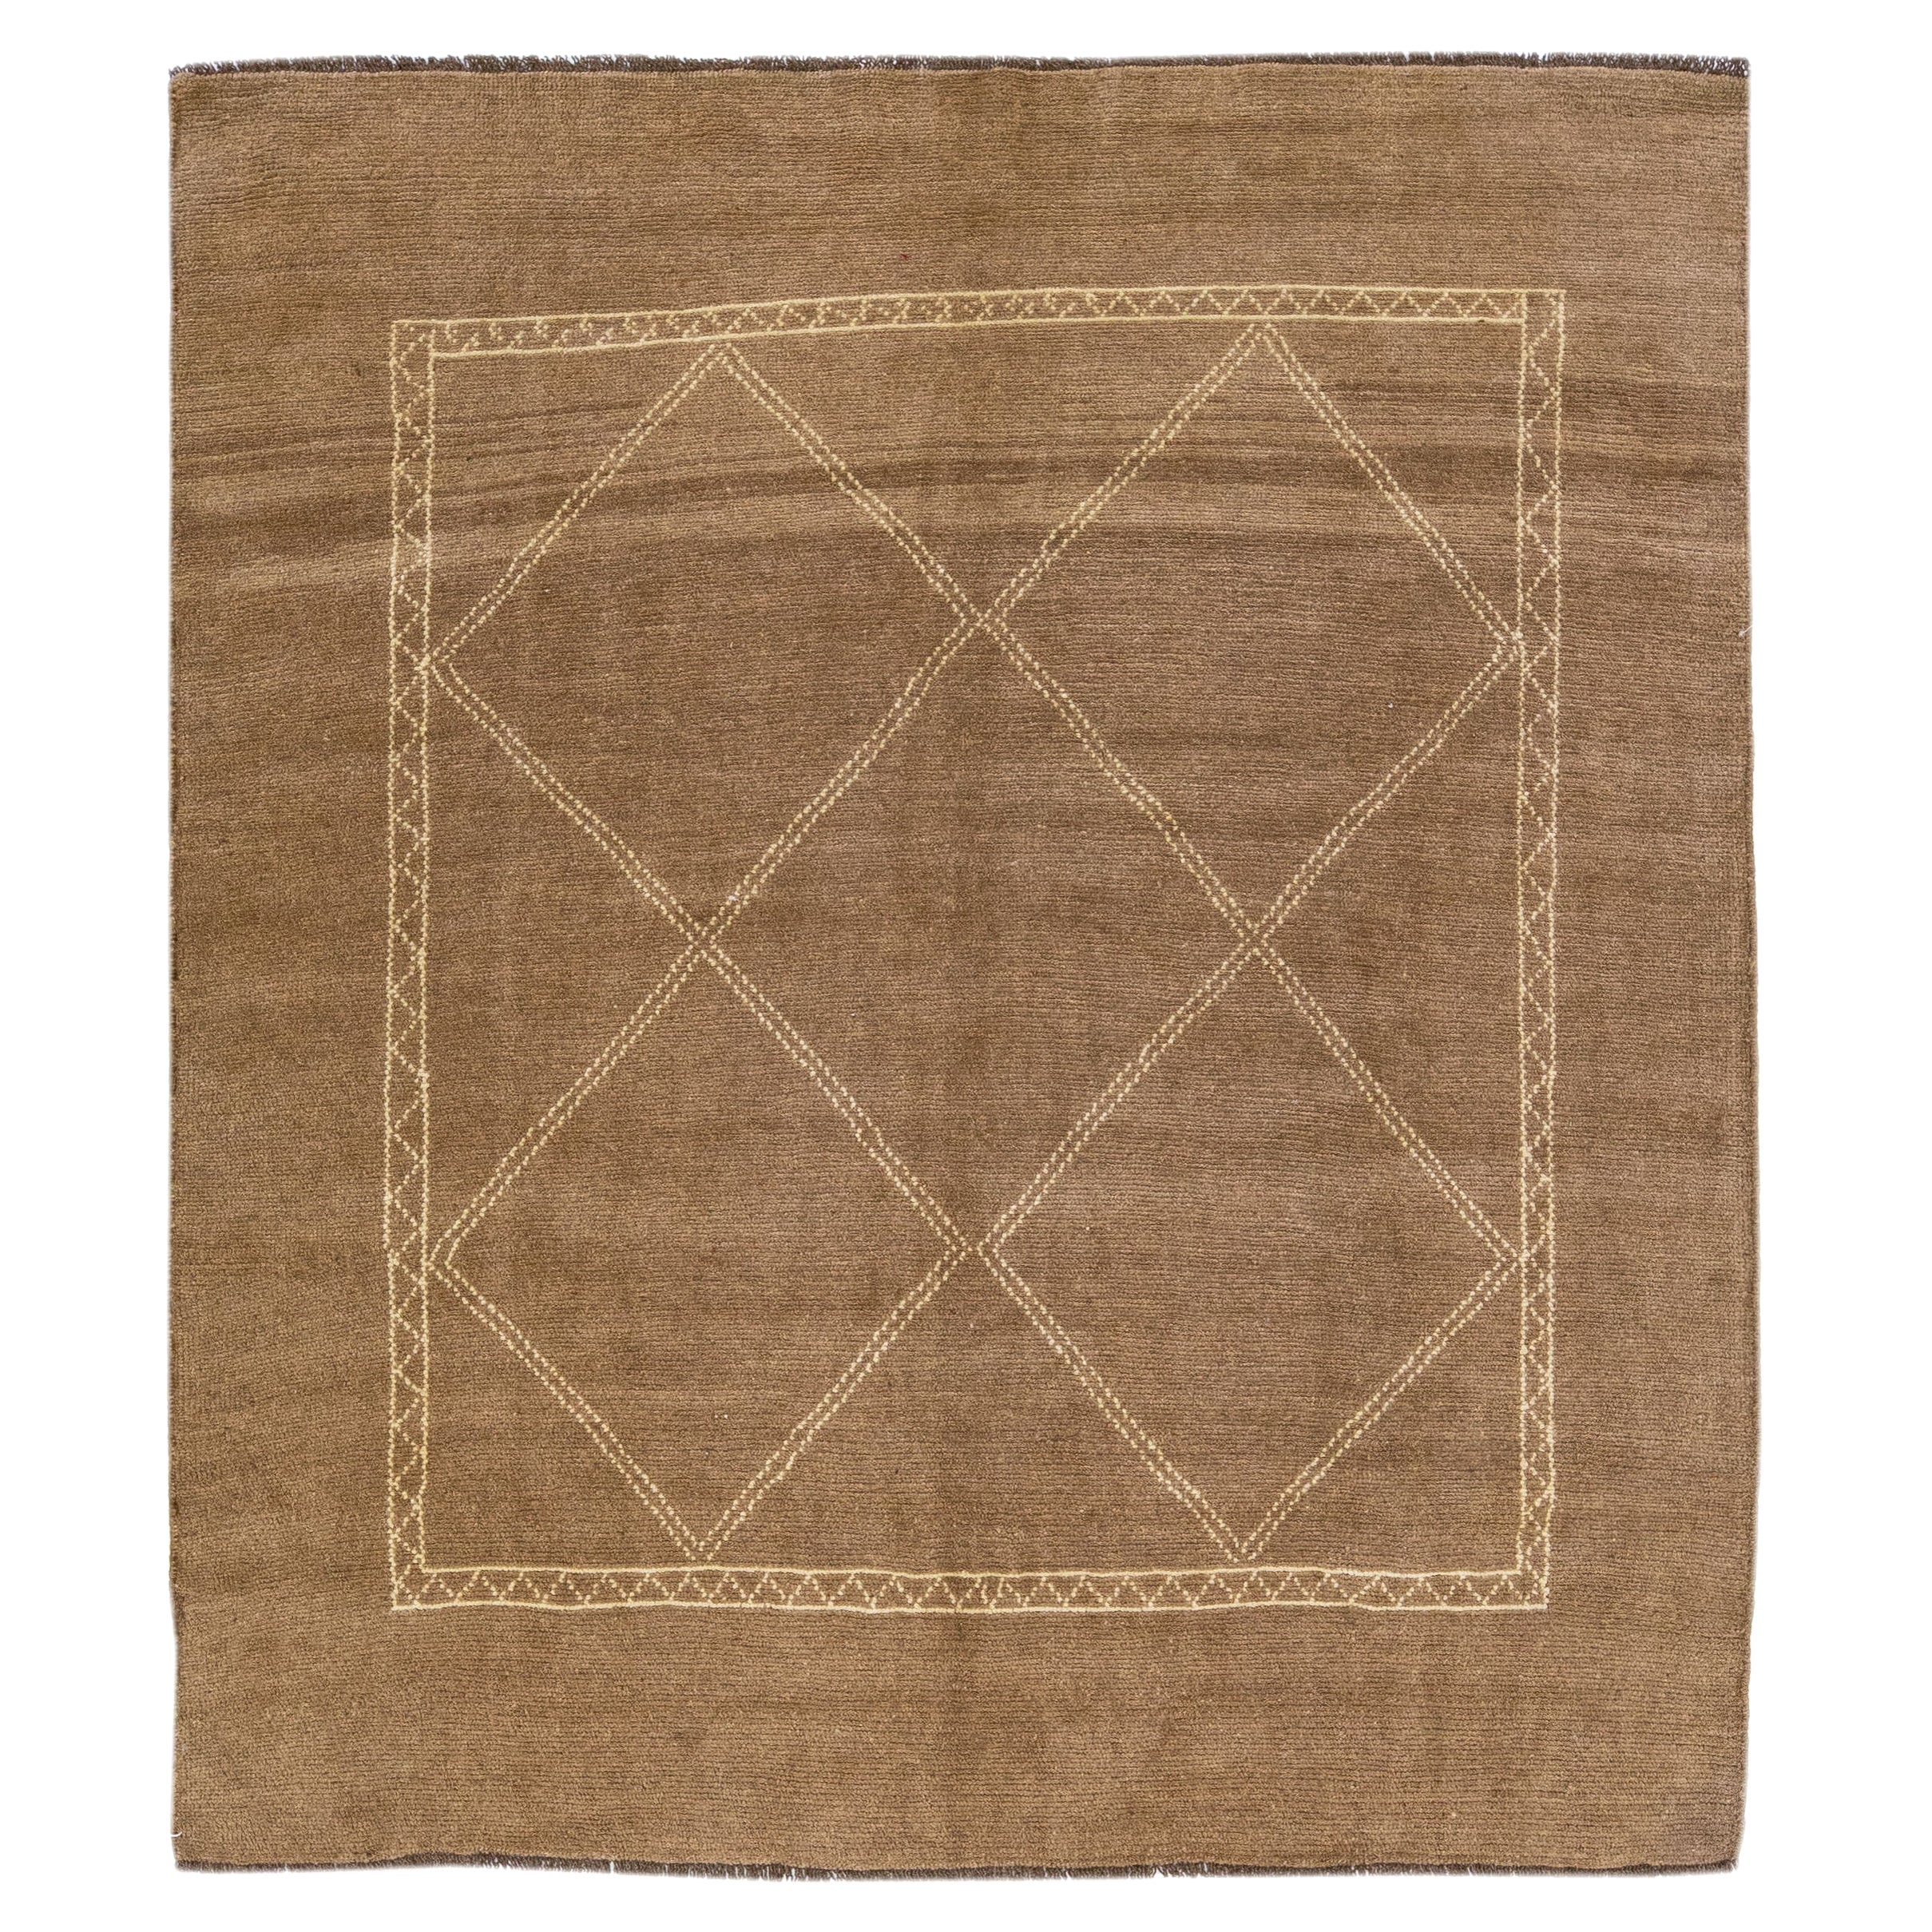 Modern Moroccan Style Light Brown Handmade Geometric Square Wool Rug by Apadana For Sale